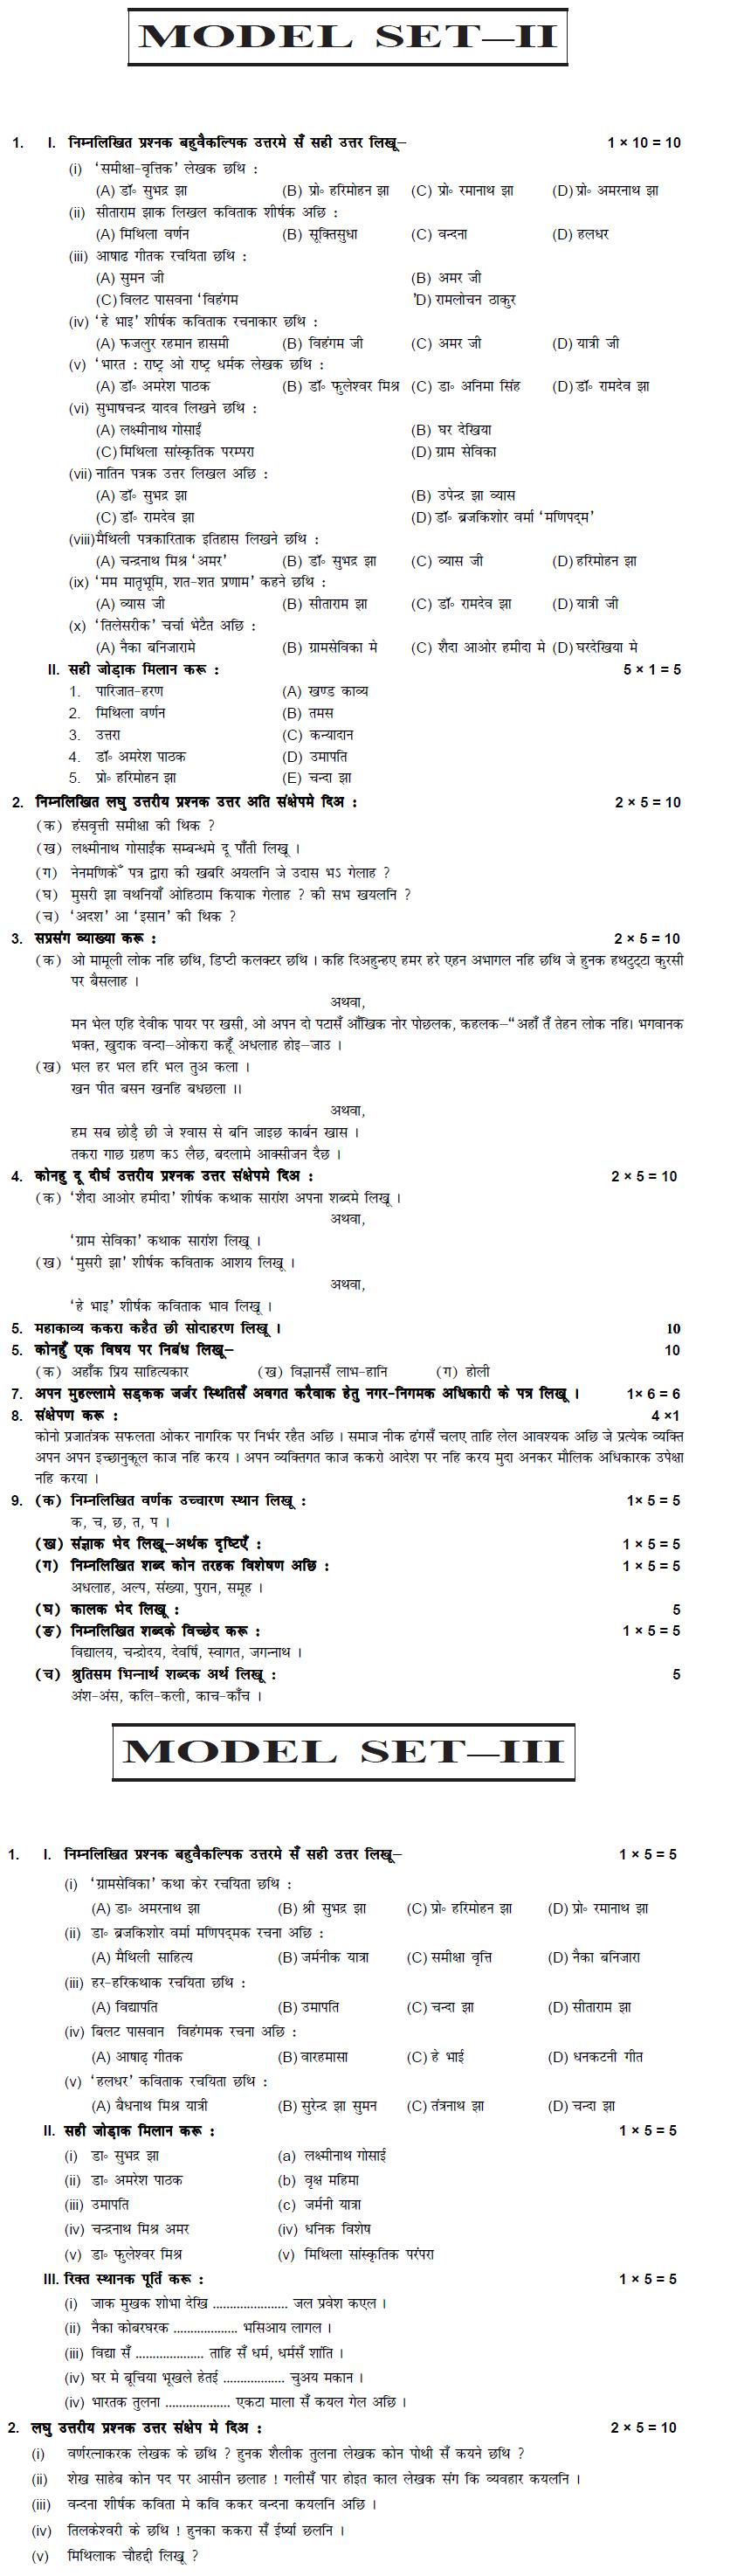 Bihar Board Class XI Humanities Model Question Papers - Maithilli